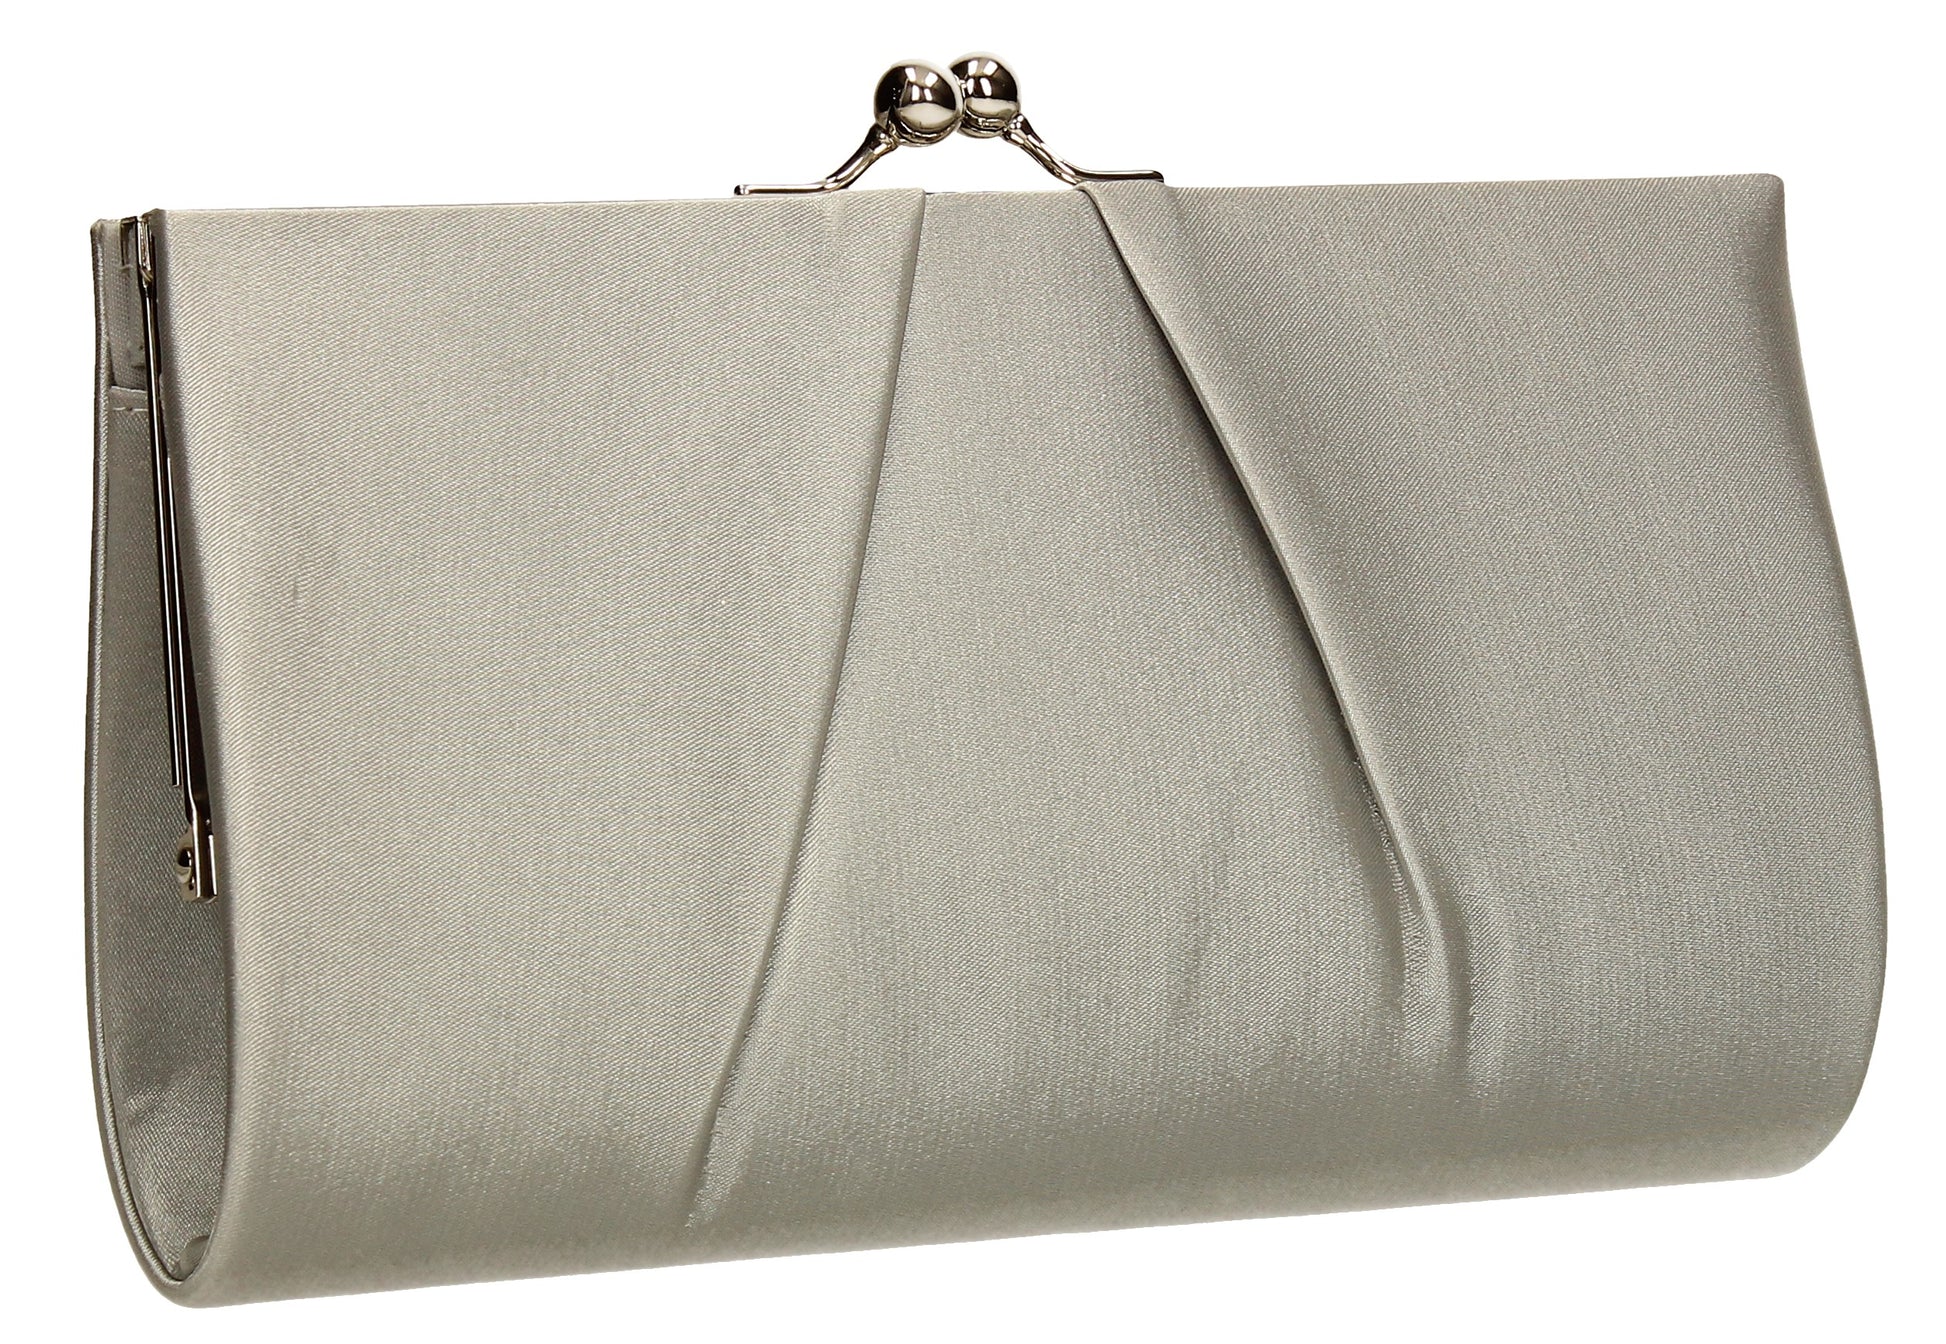 SWANKYSWANS Katy Satin Clutch Bag Silver Cute Cheap Clutch Bag For Weddings School and Work